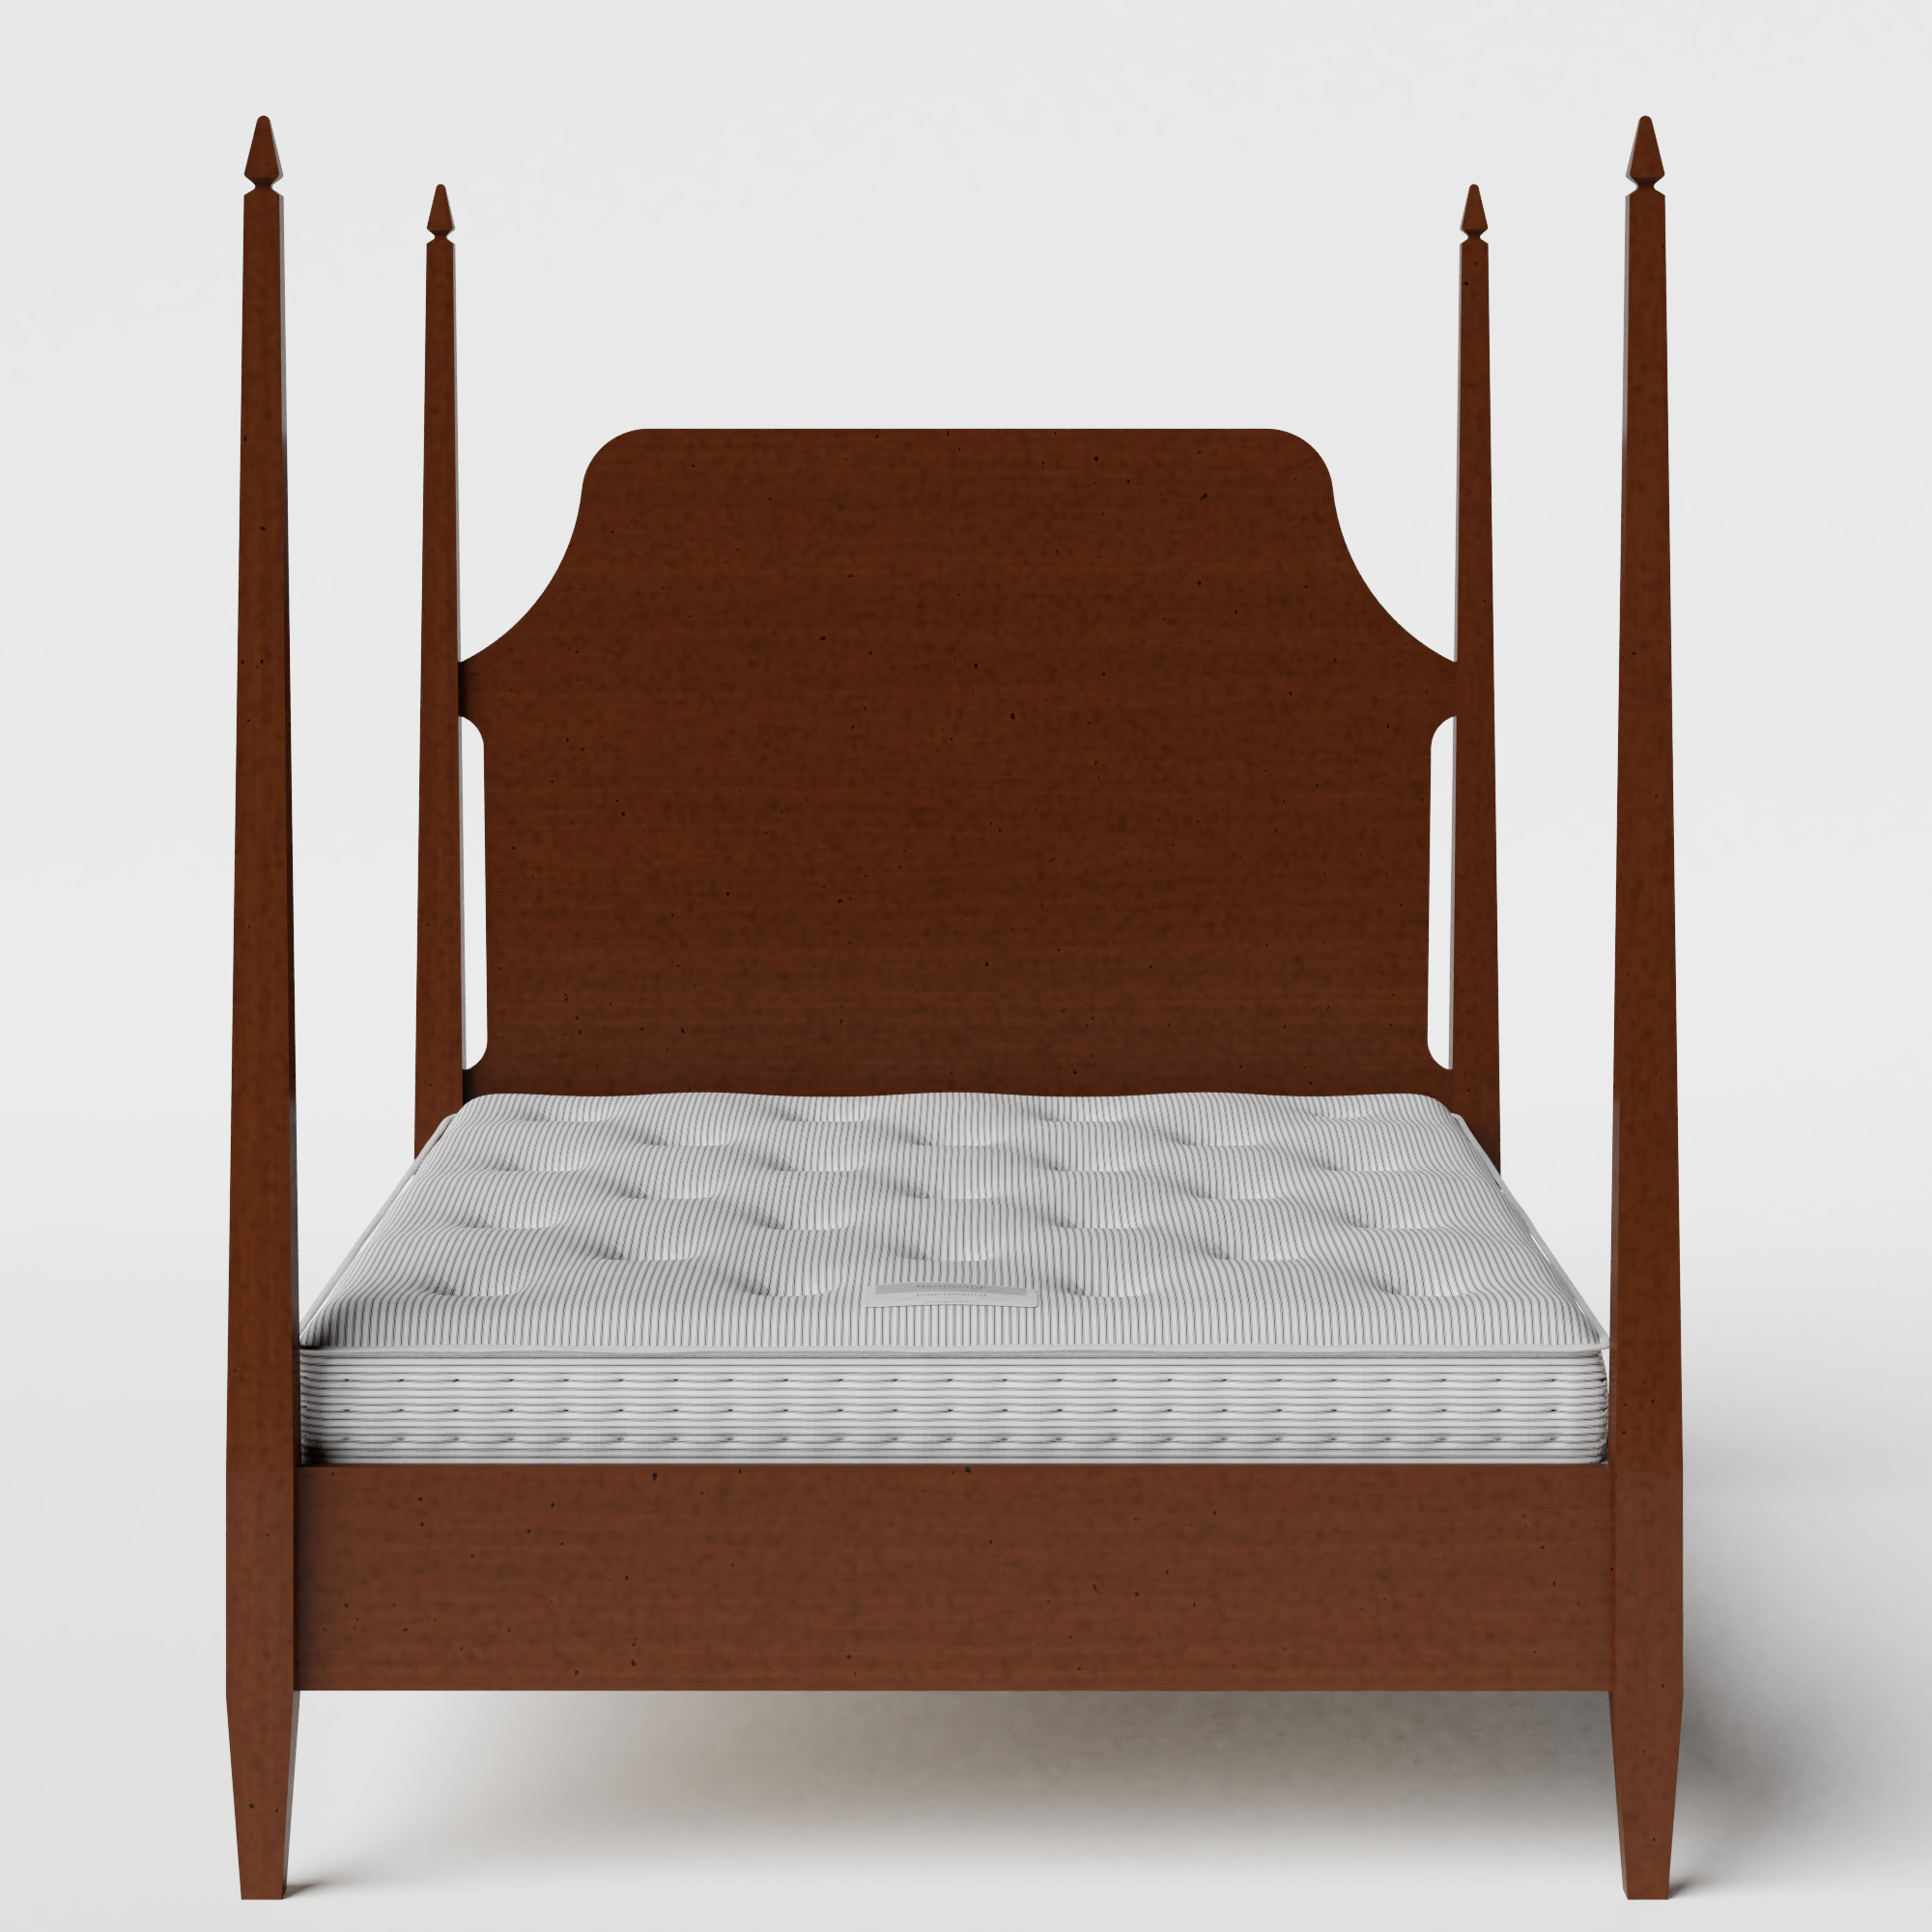 Turner wood bed in dark cherry with Juno mattress